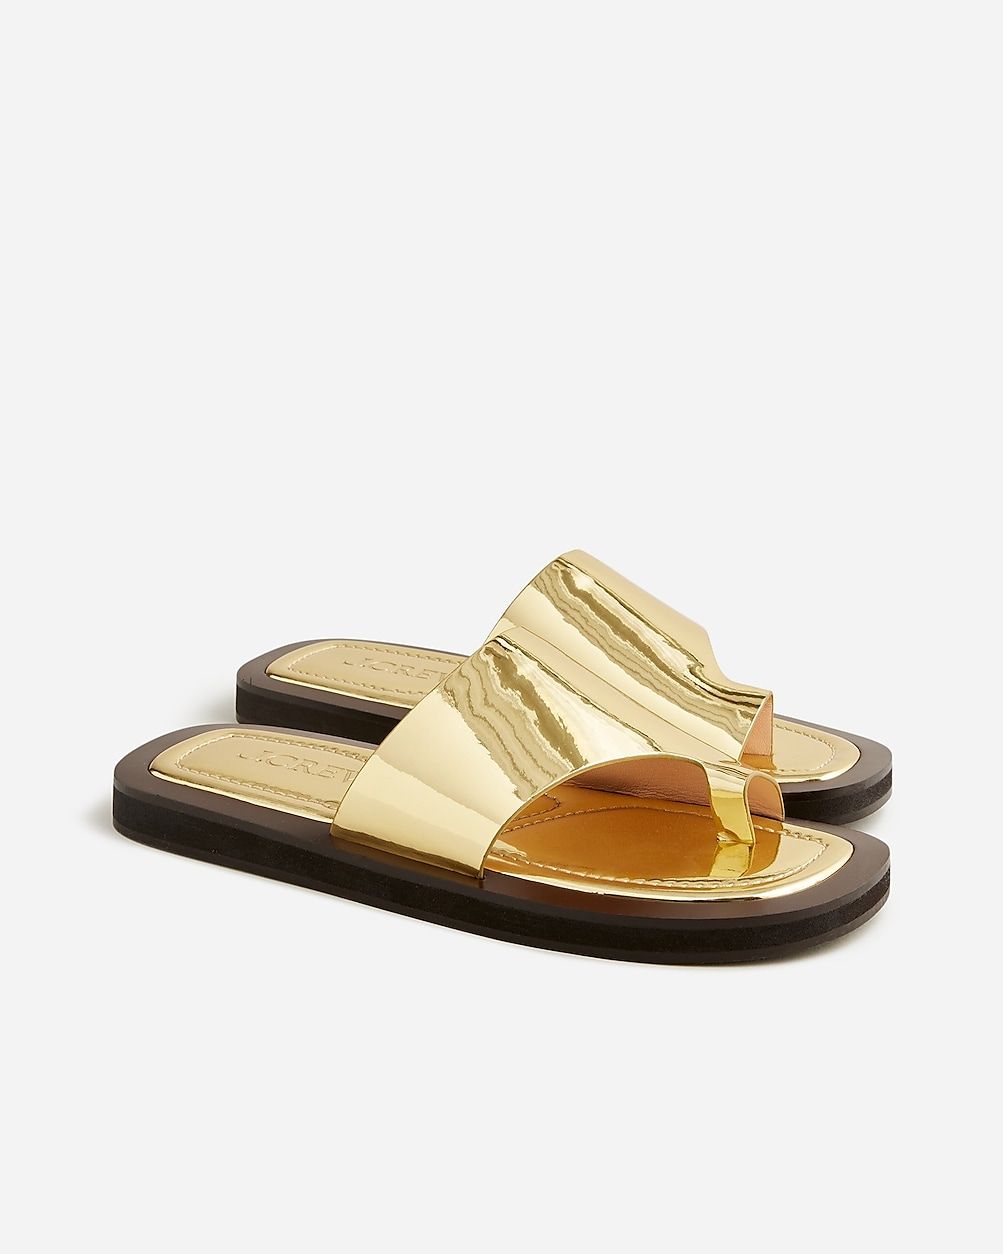 Toe-ring slide sandals in metallic leather | J.Crew US